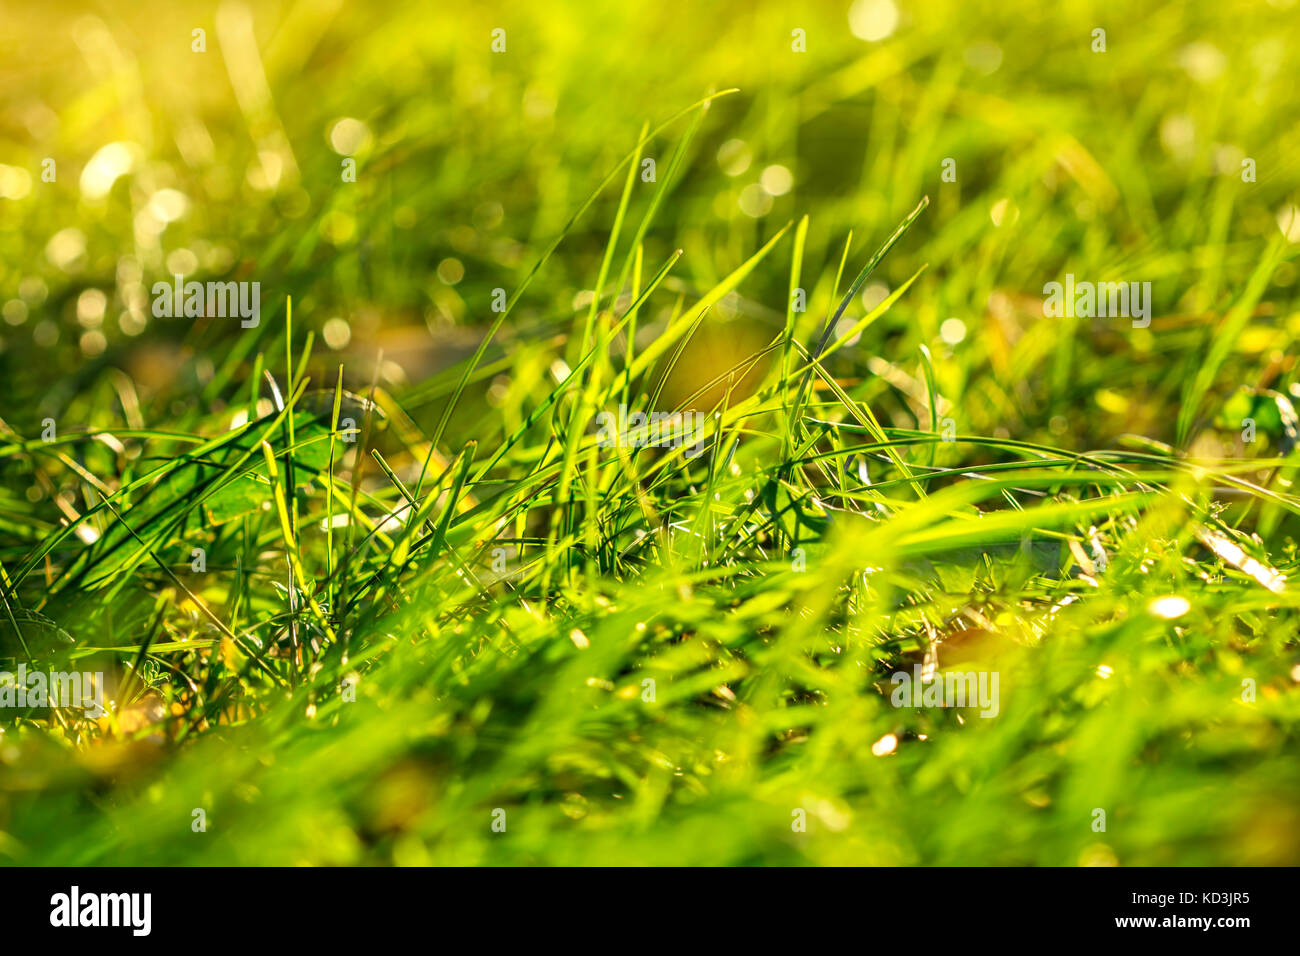 Green grass blur with light effects Stock Photo